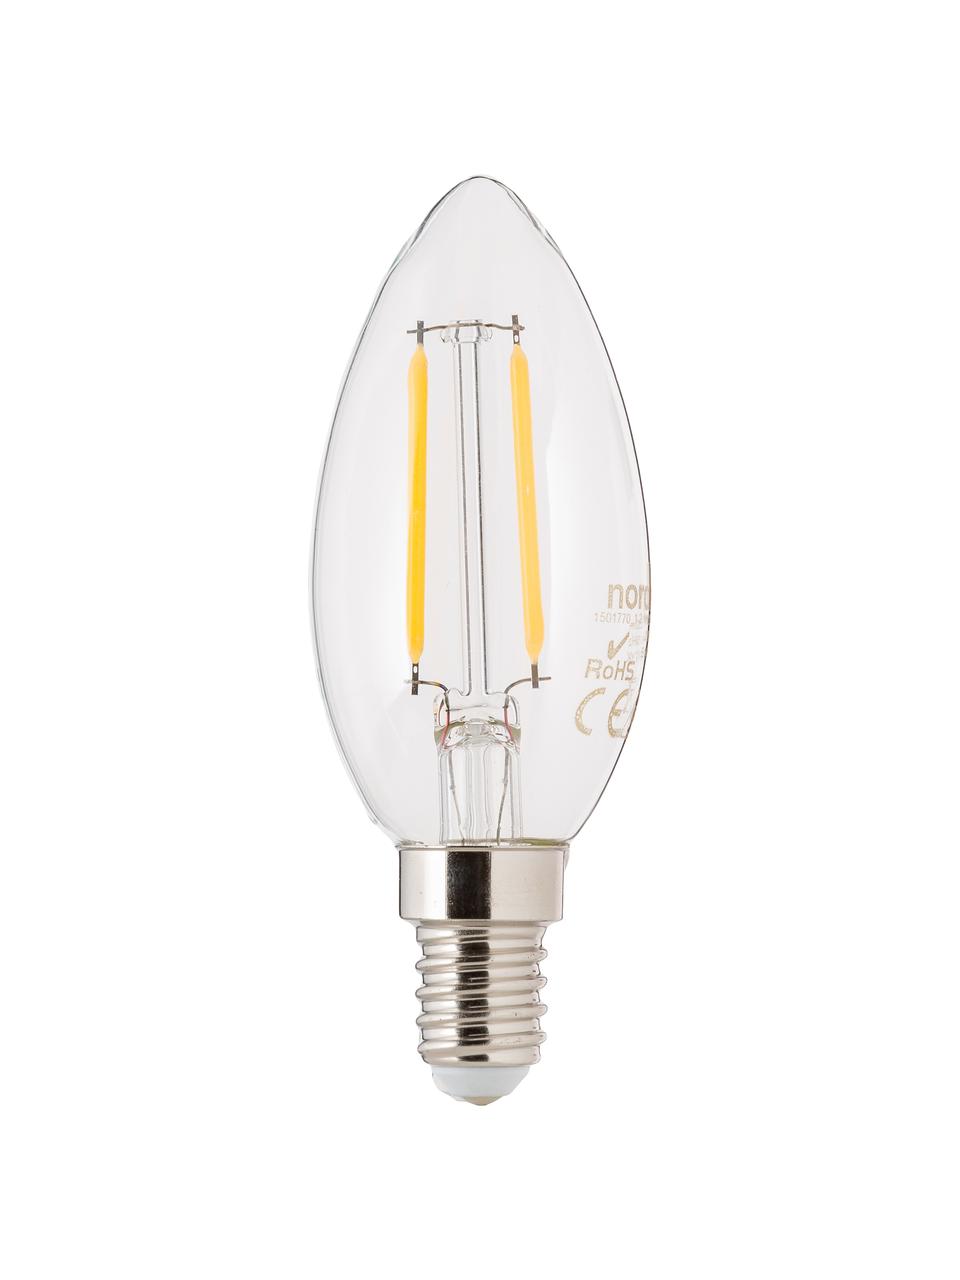 E14 Leuchtmittel, 250lm, warmweiß, 5 Stück, Leuchtmittelschirm: Glas, Leuchtmittelfassung: Aluminium, Transparent, Ø 4 x H 10 cm